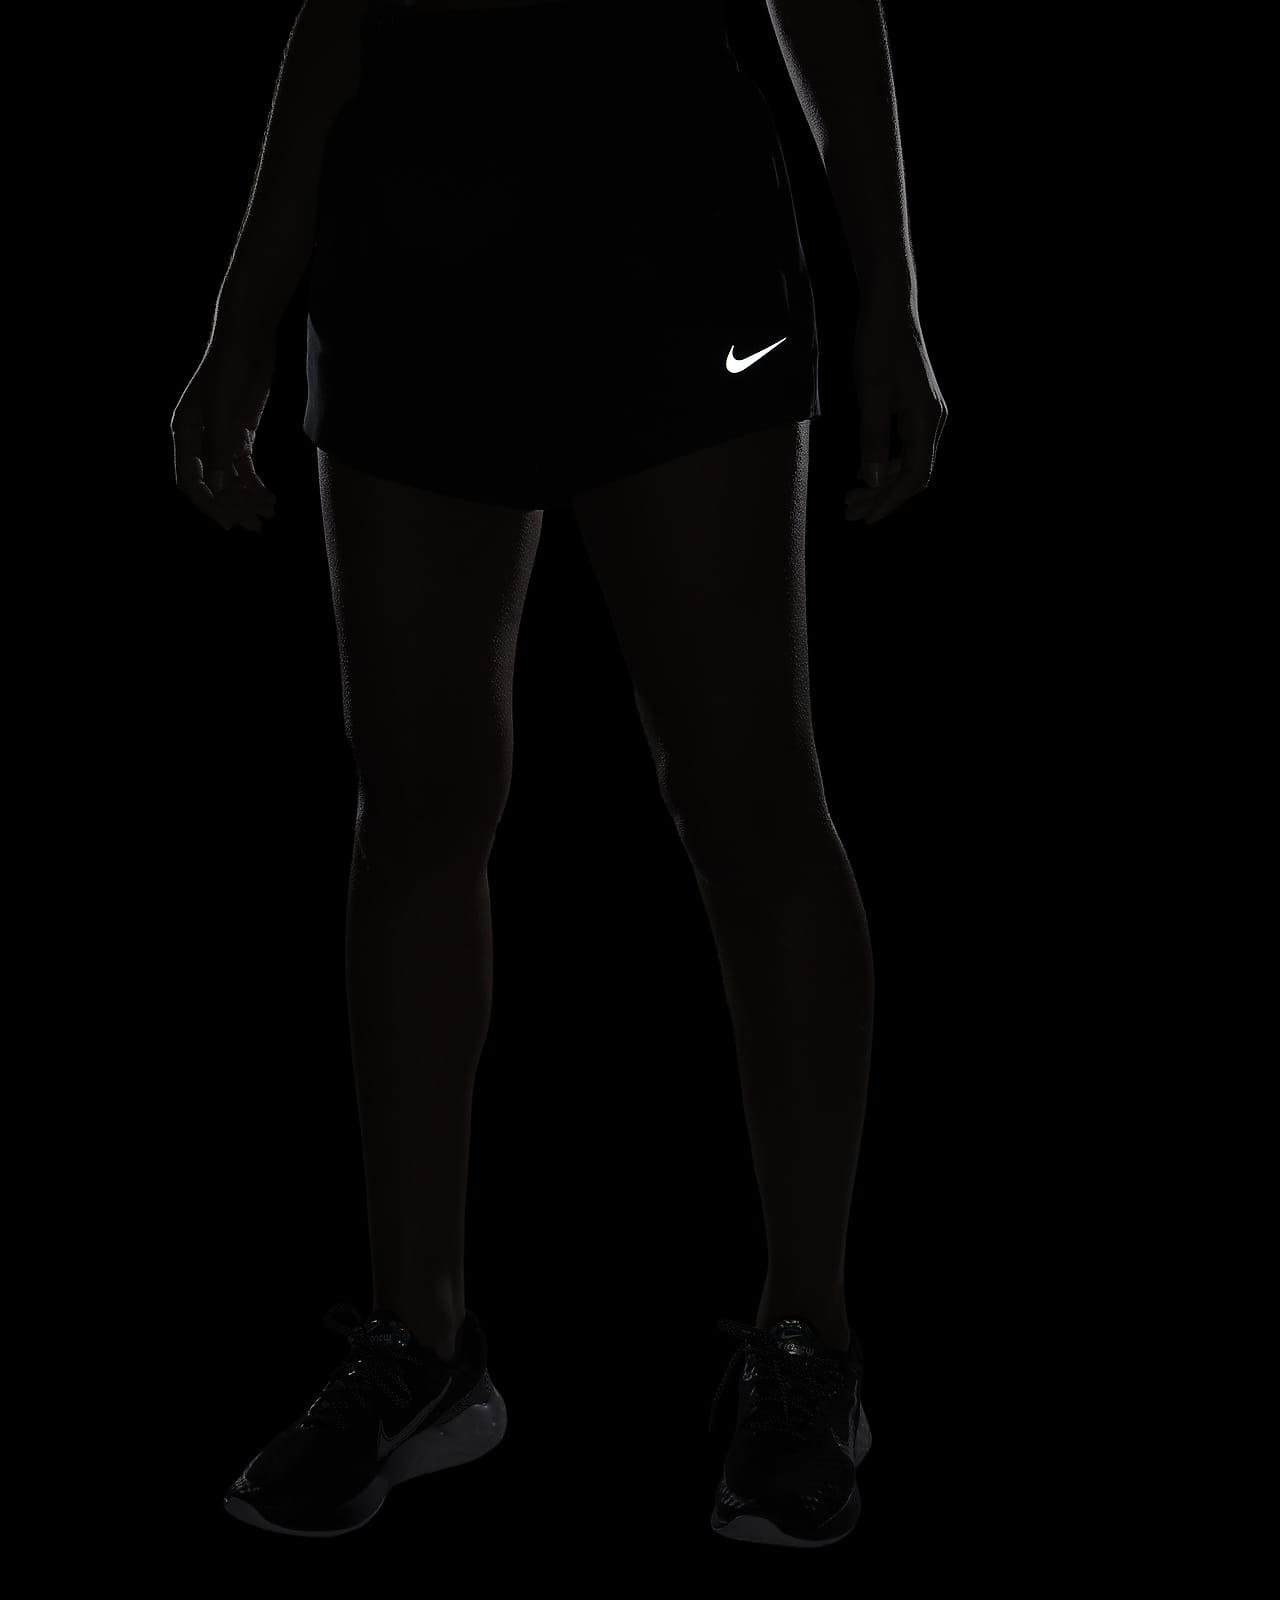 WOMEN'S Nike Running Dri Fit black shorts with built in underwear